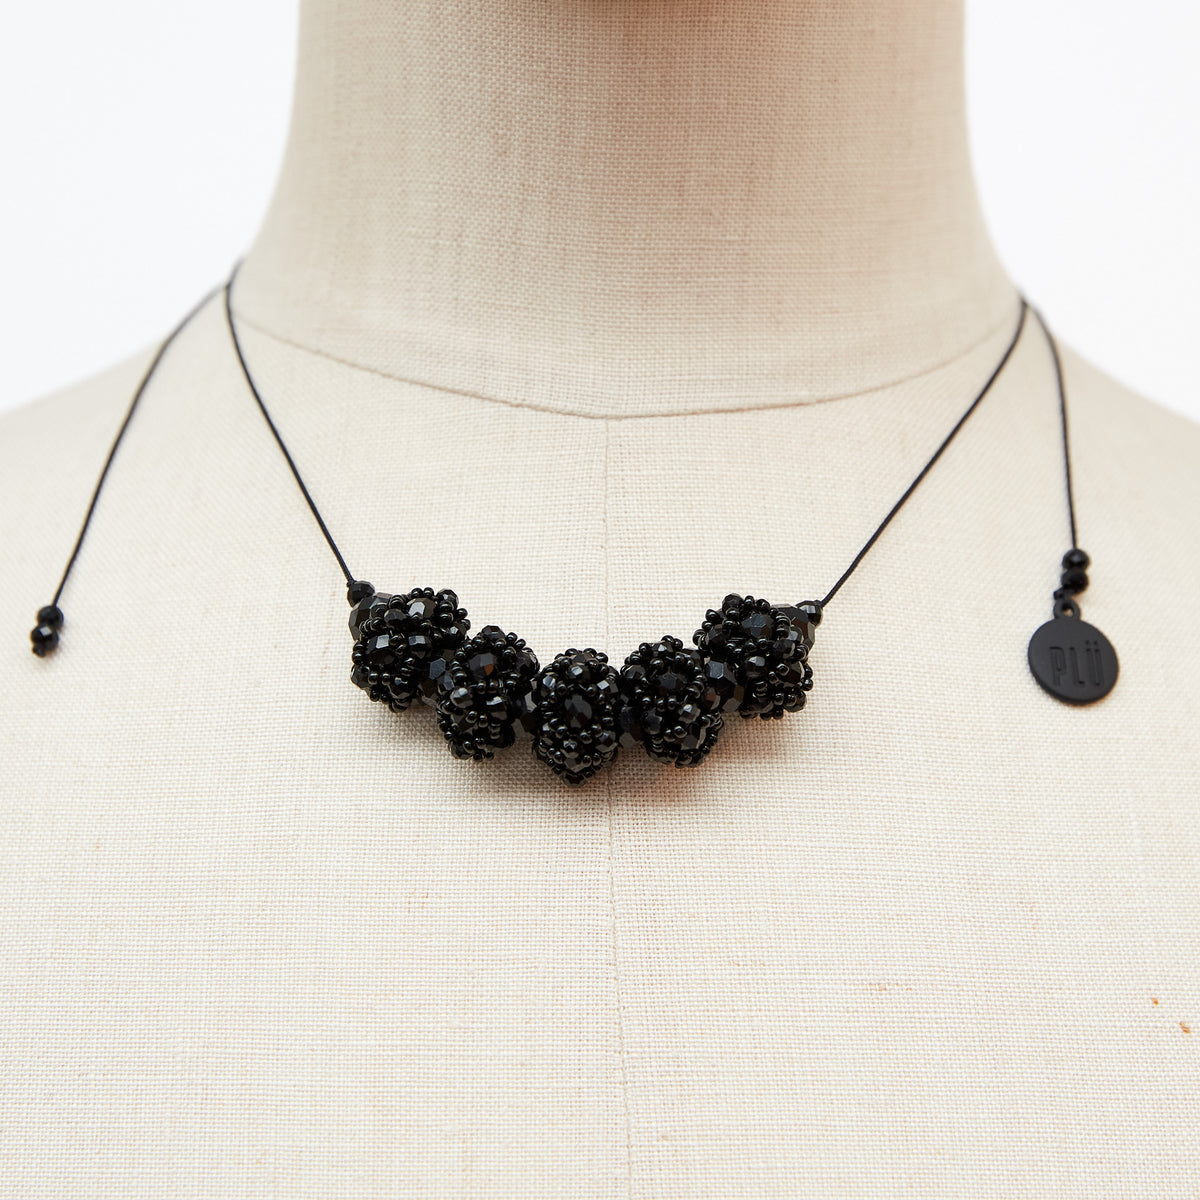 1532 - 5 Donut Necklace in Black